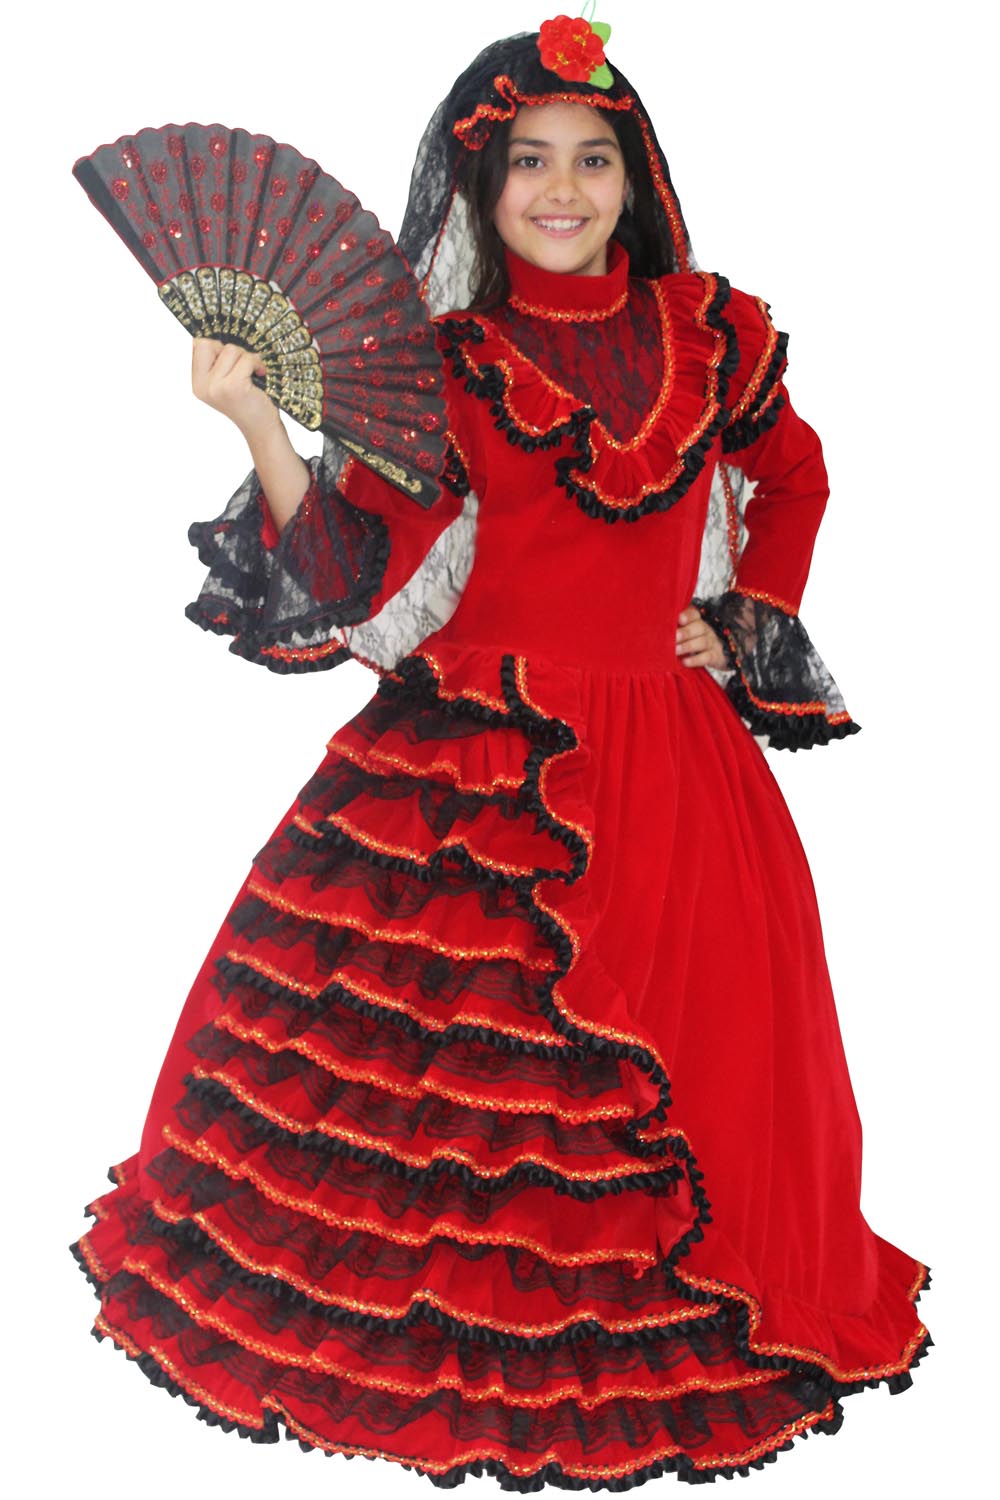 Spagnola deluxe tg. 44 - Costume Carnevale Adulto donna